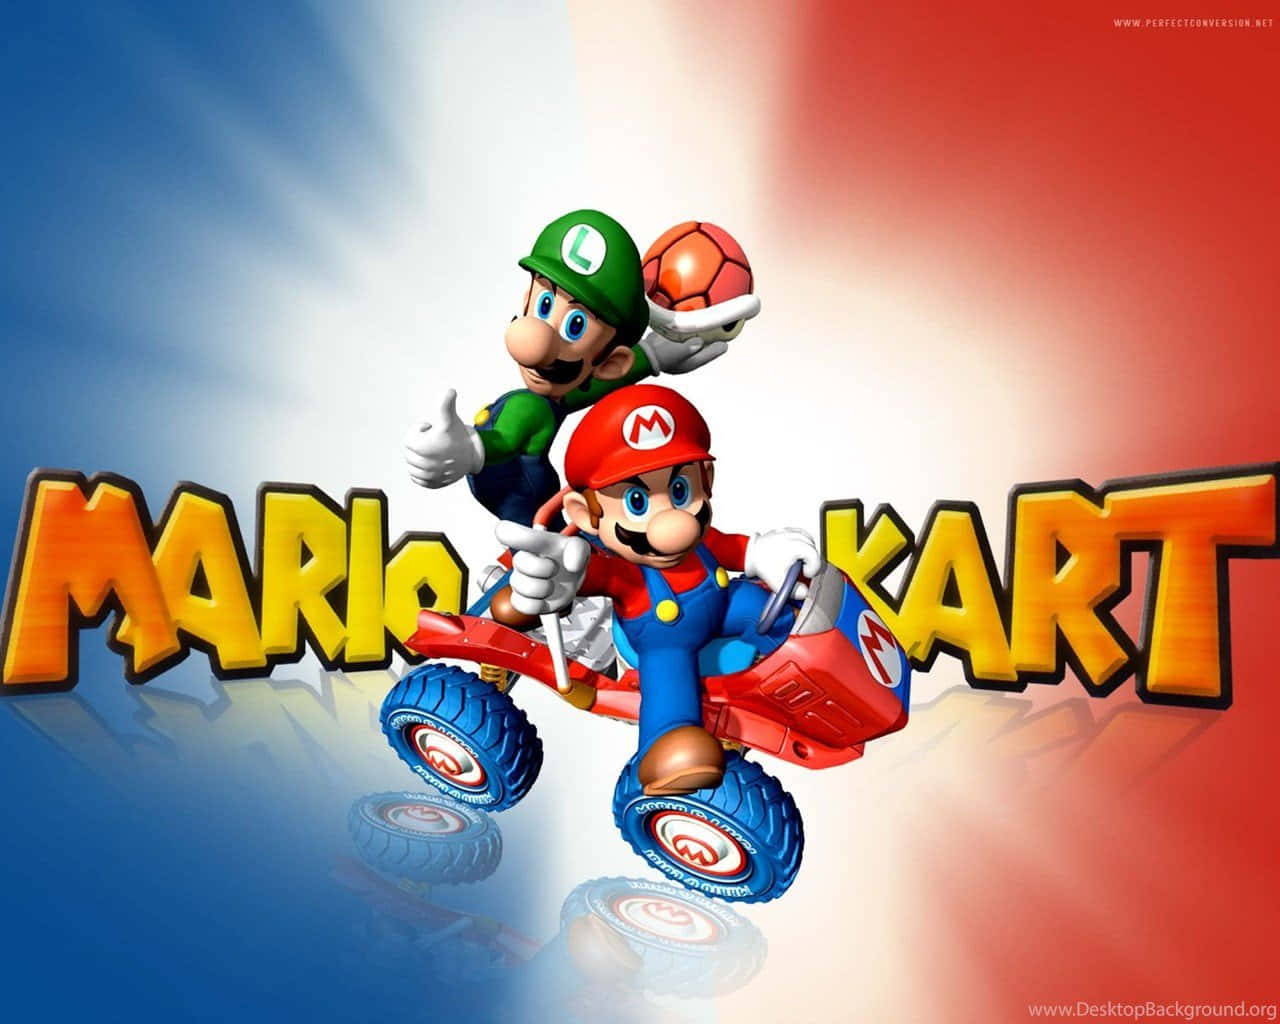 Race through the Mushroom Kingdom on colorful karts in Mario Kart